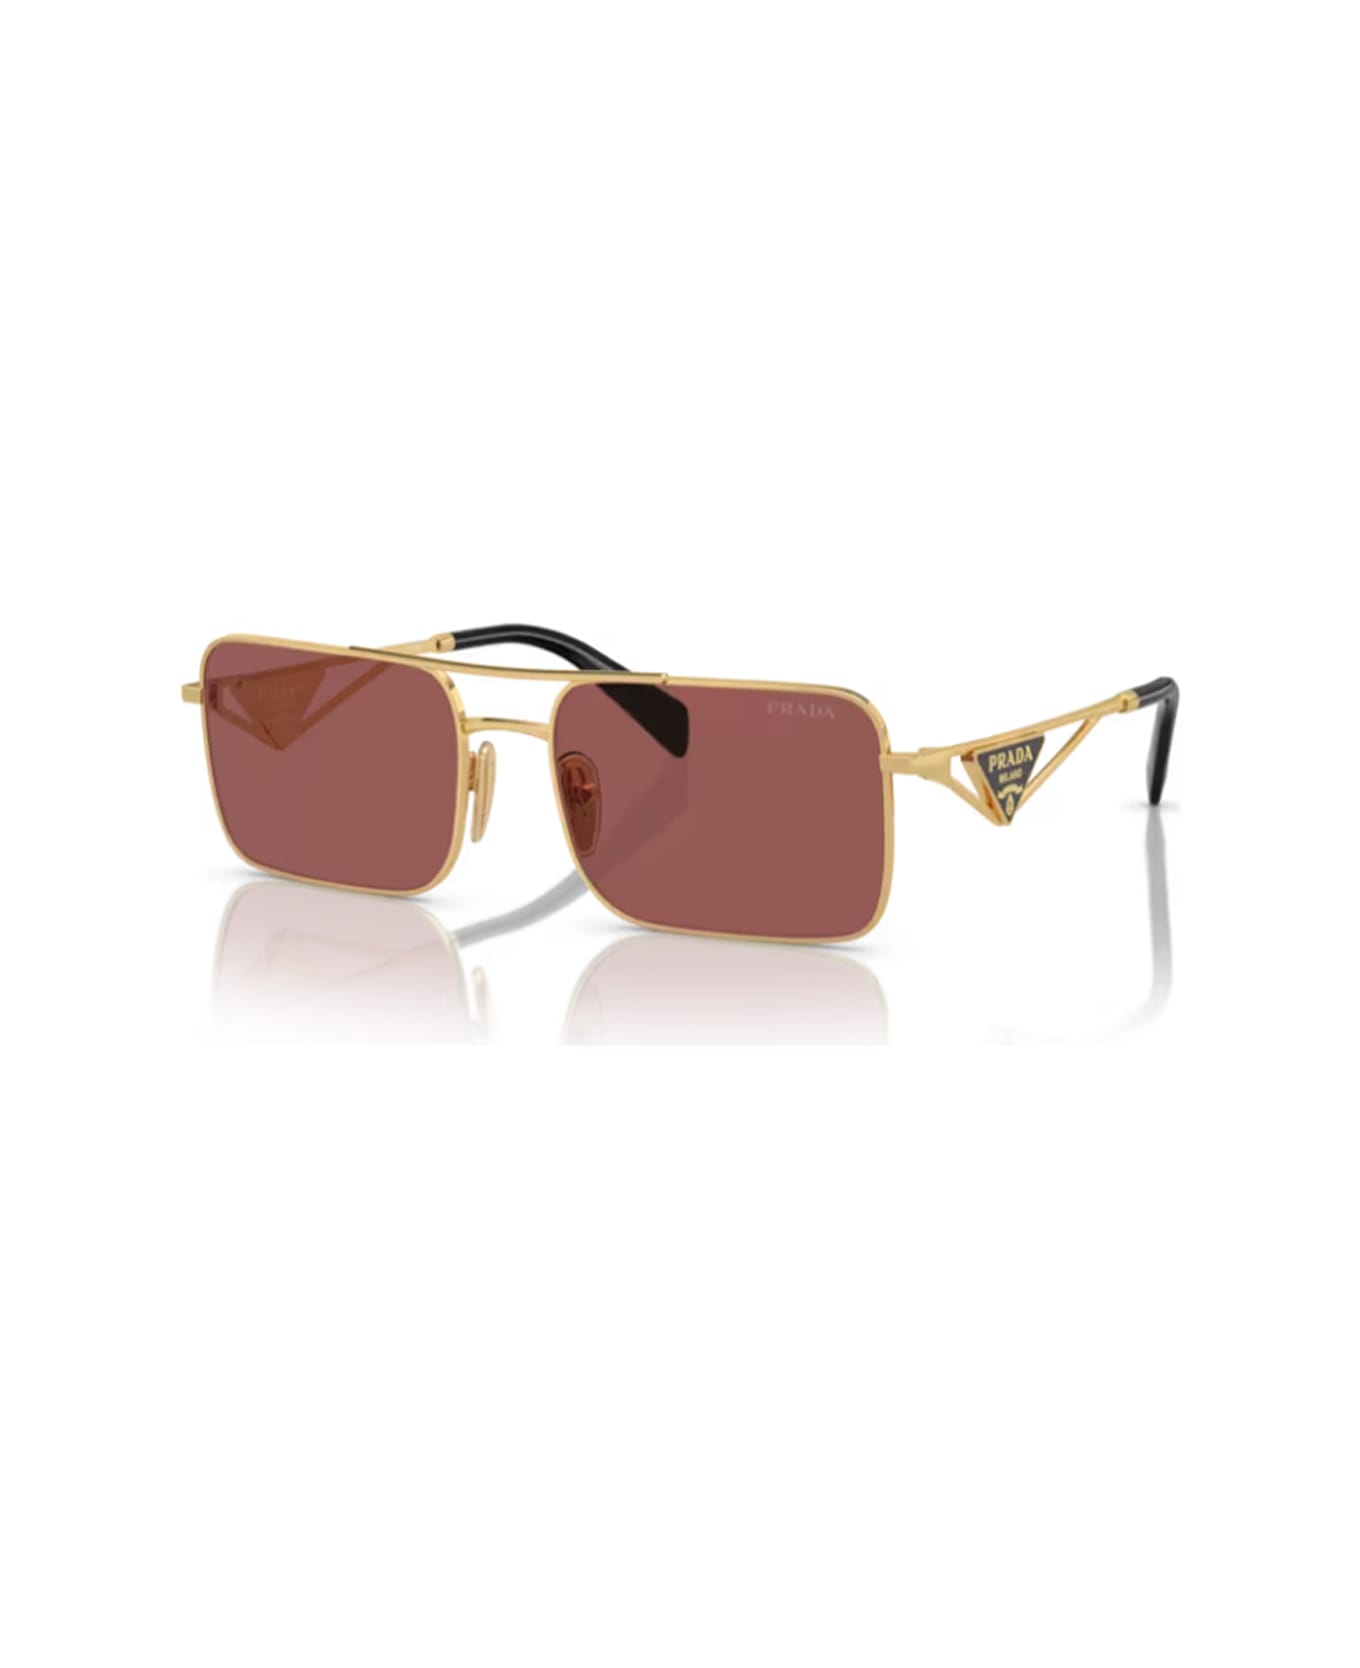 Prada Eyewear Pra52s 5ak08s Sunglasses - Oro